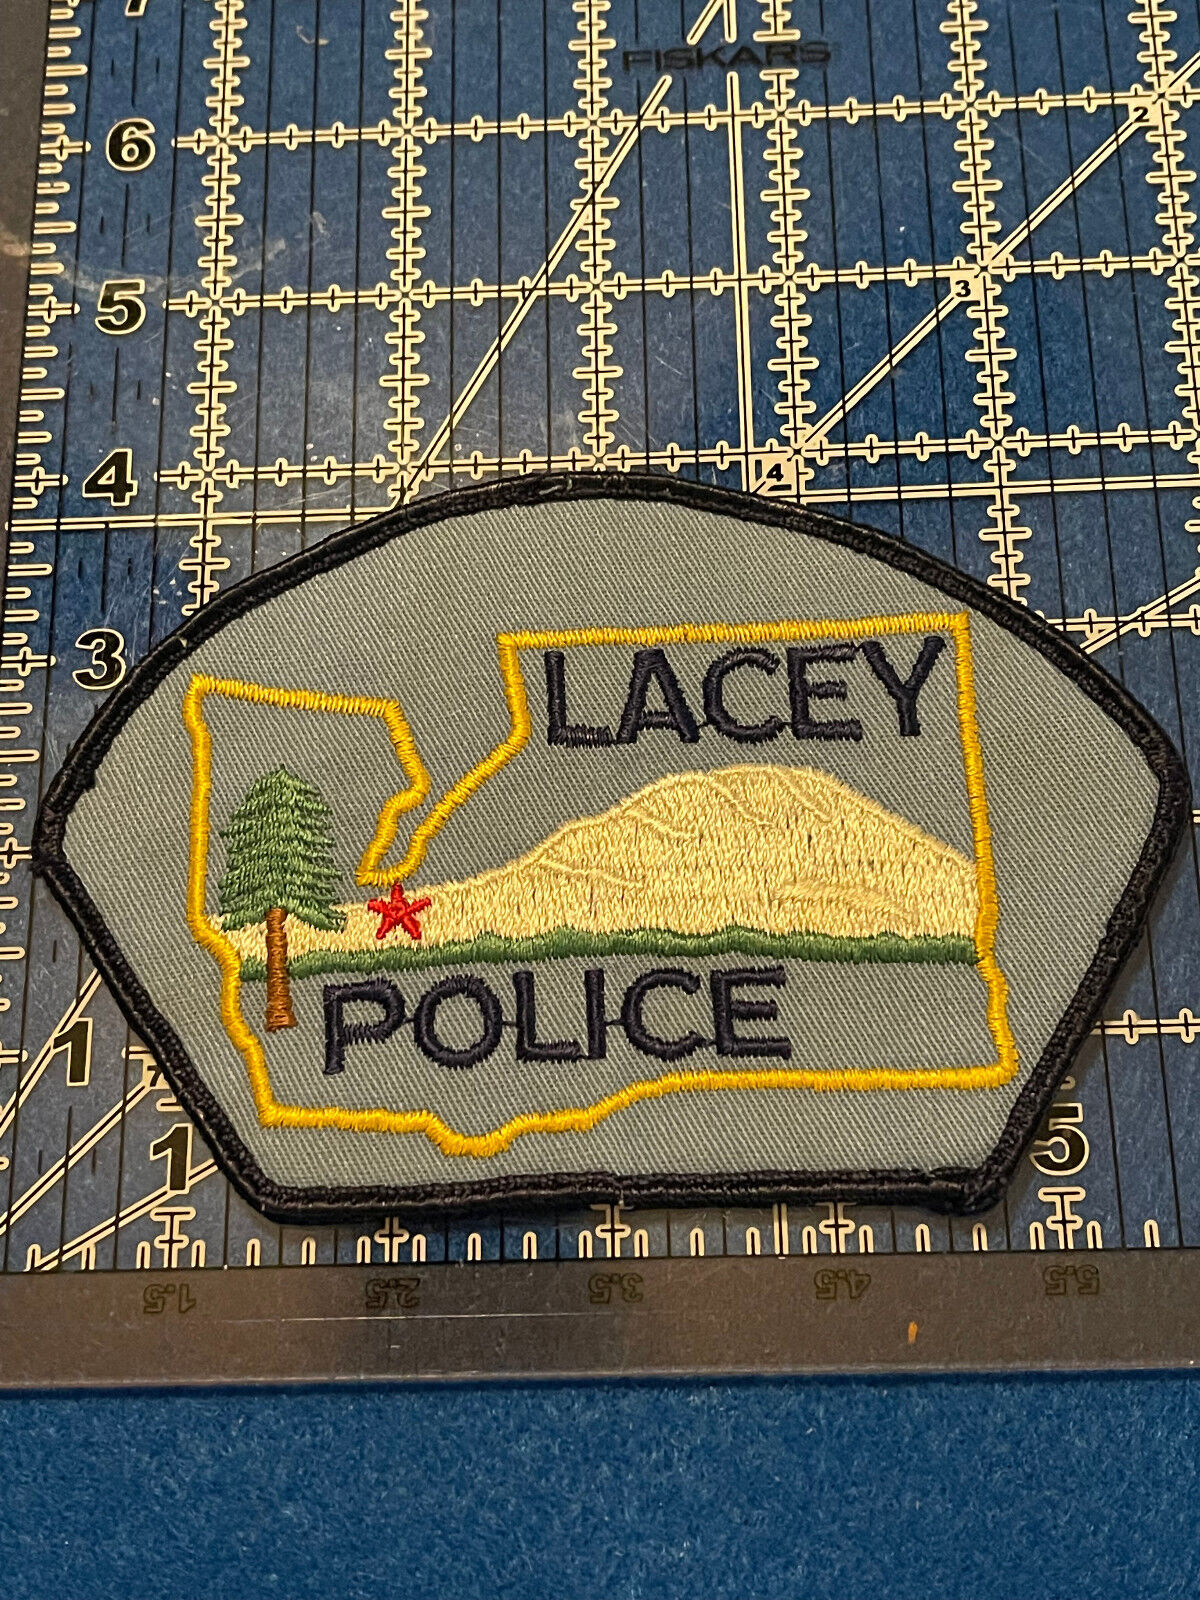 Vintage Lacey Wa Washington Police Patch